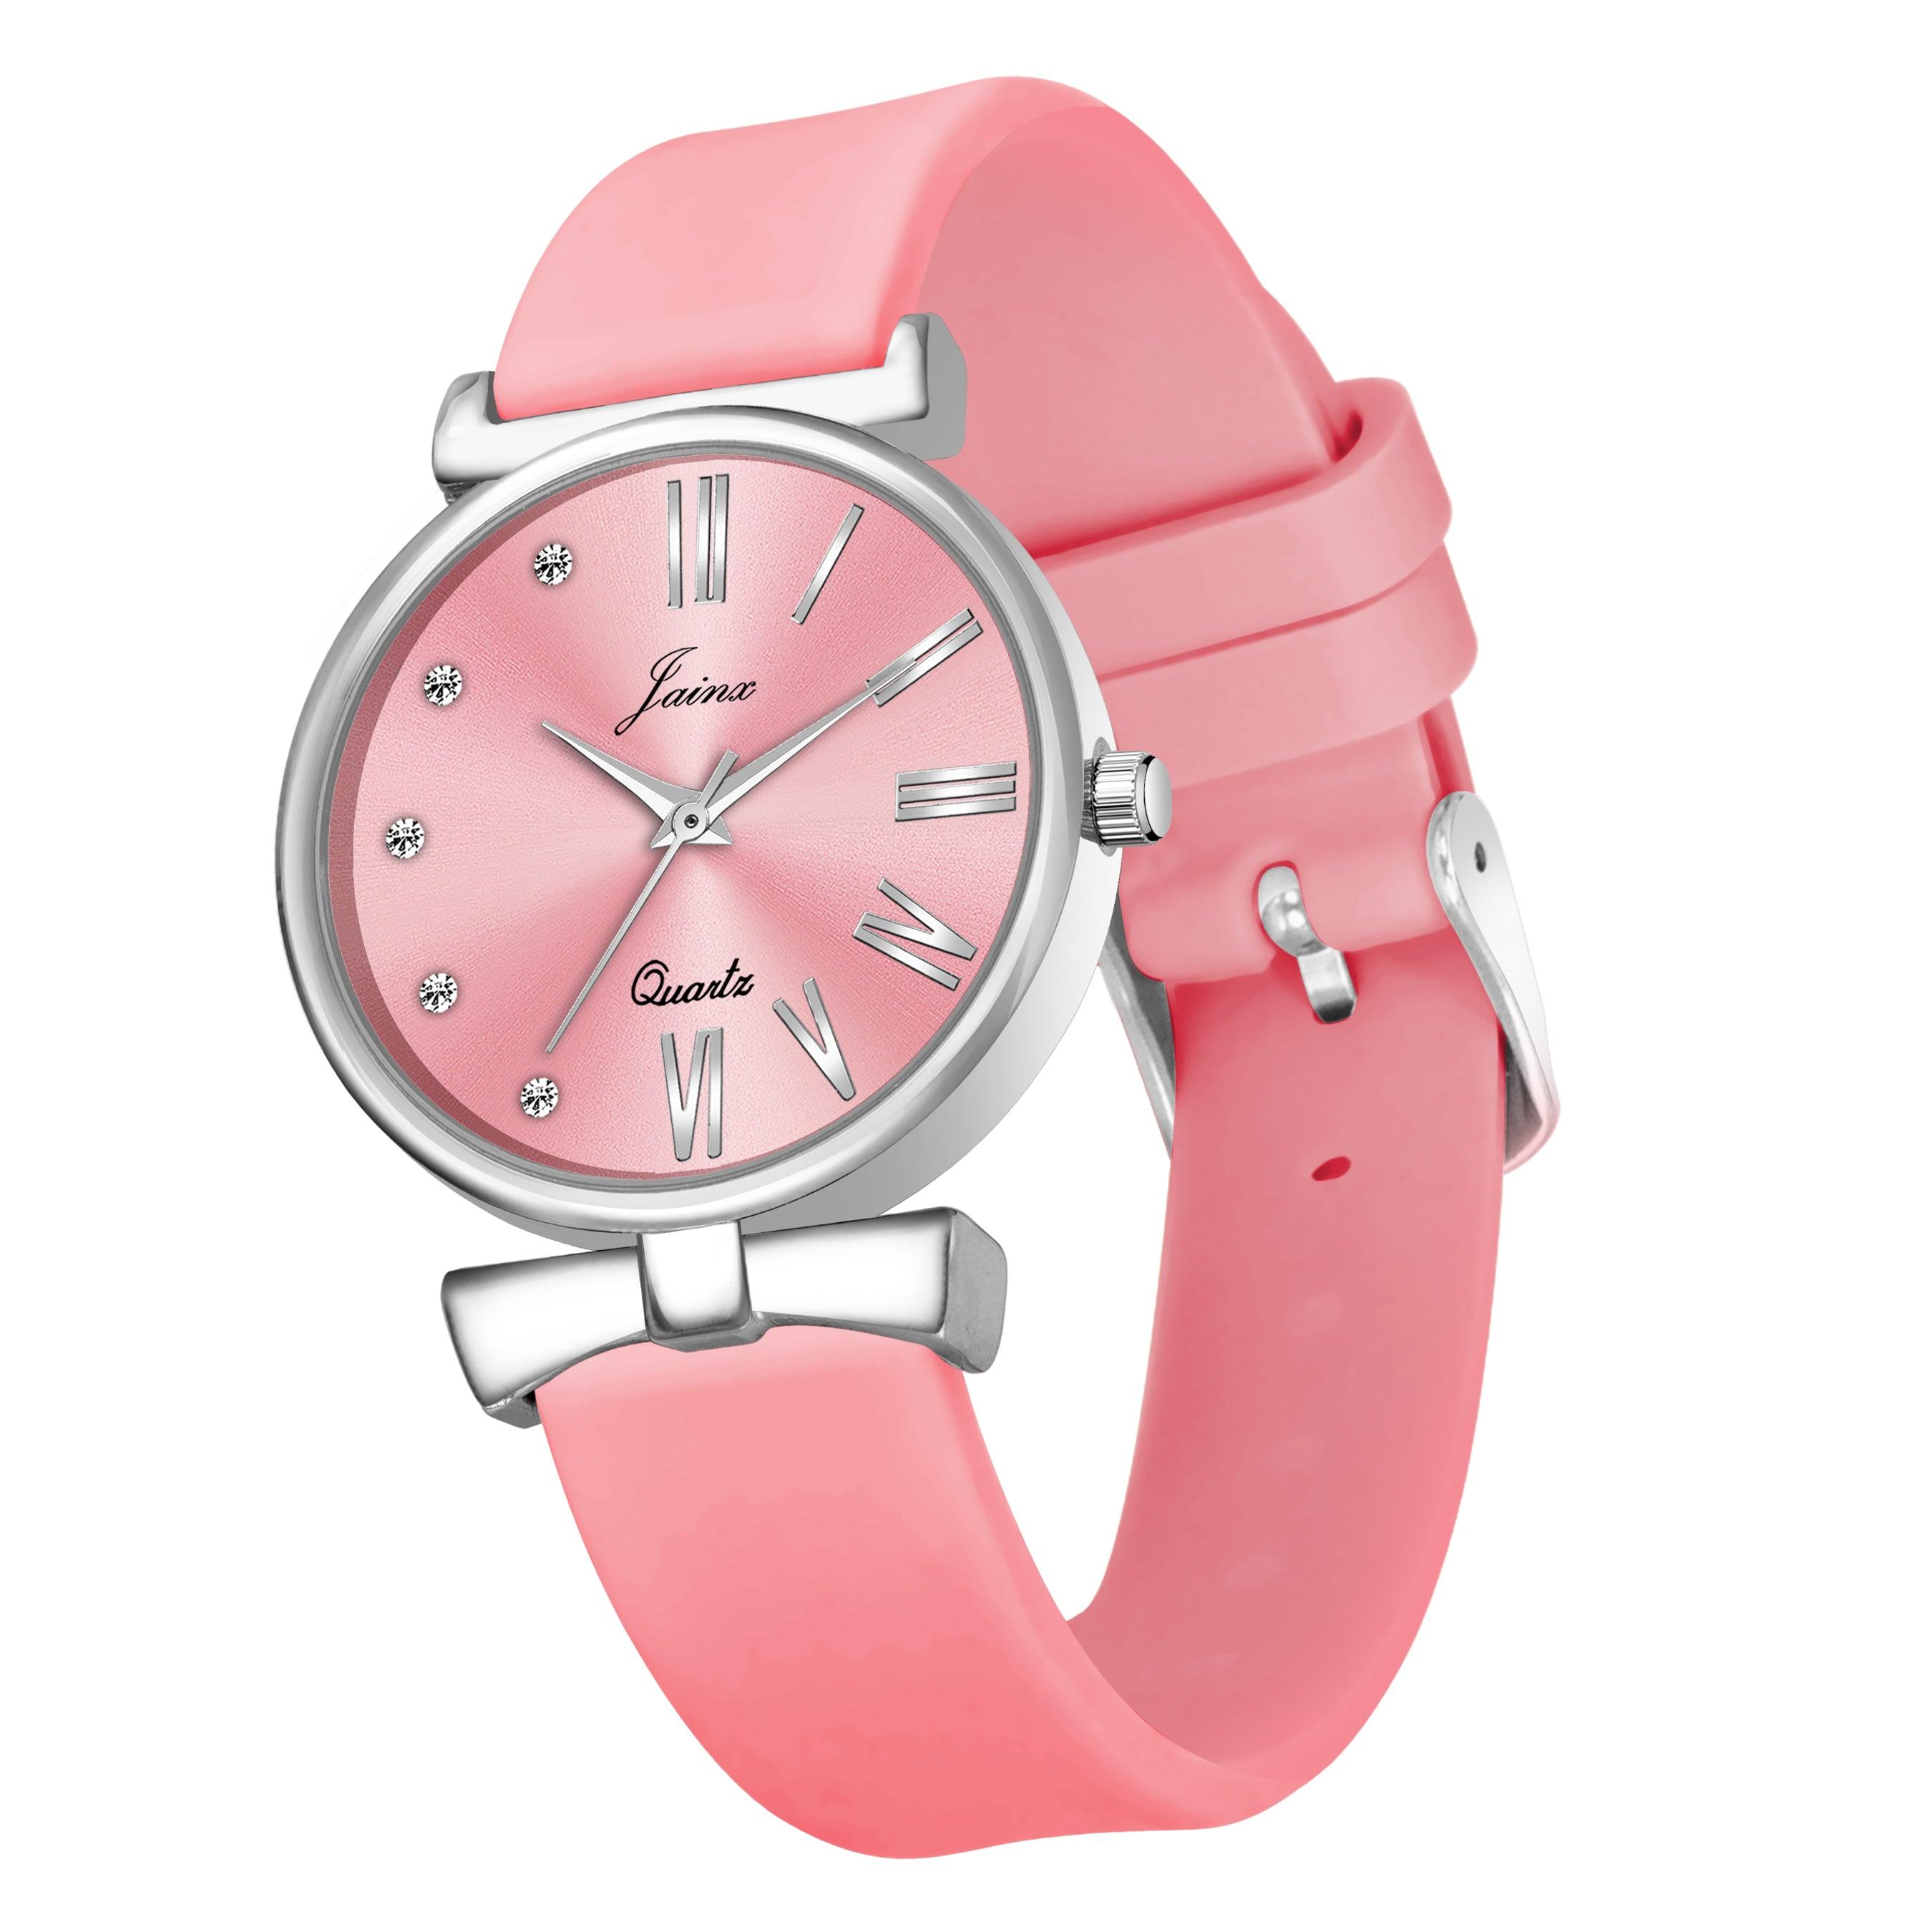 Jainx Silicone Band Analog Wrist Watch for Women - JW8559 - Jainx Store